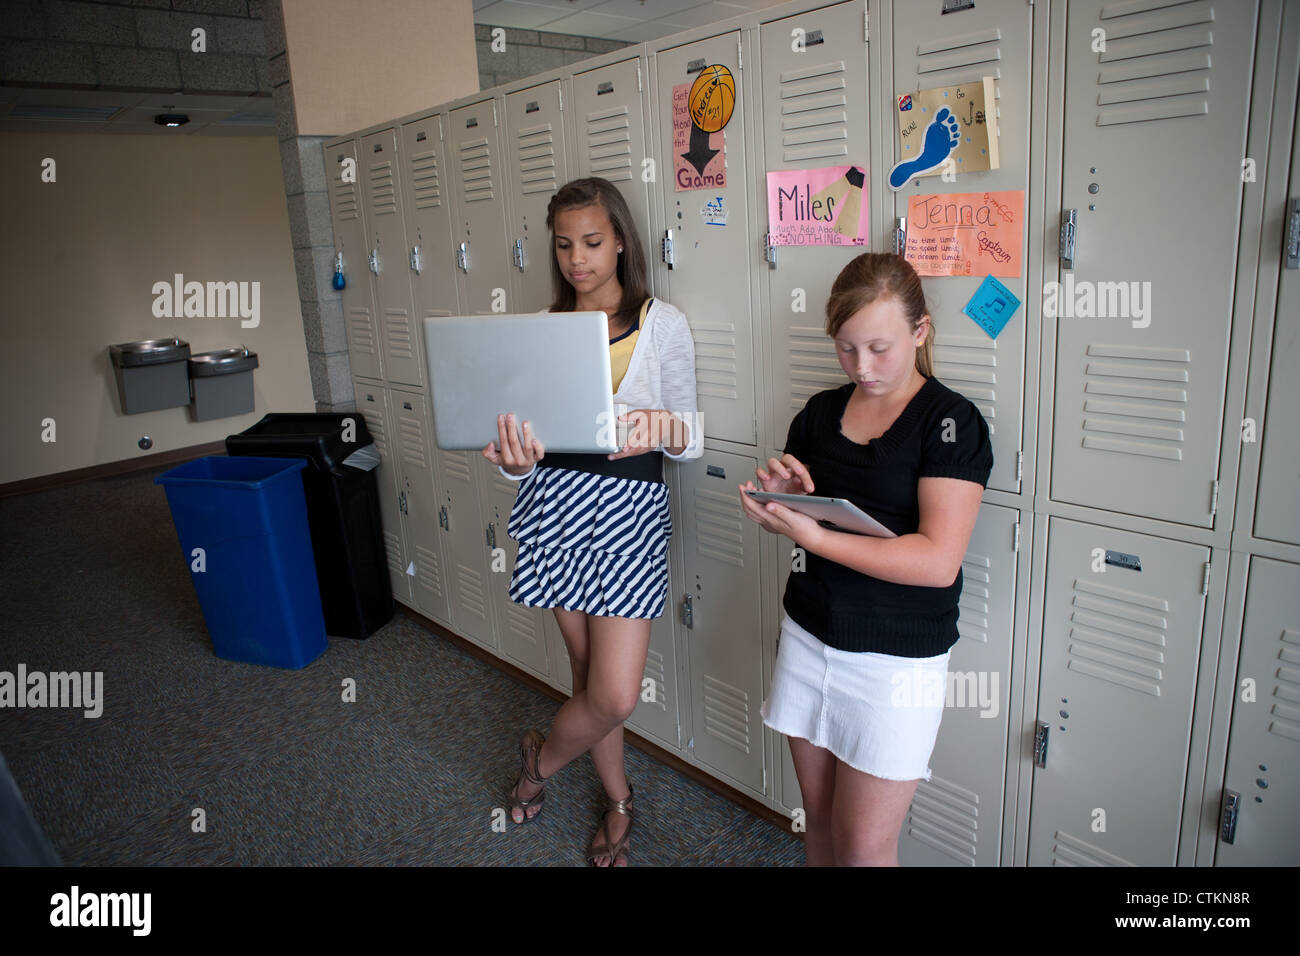 Teenage girls using ipad and laptop in middle school hallway. Stock Photo